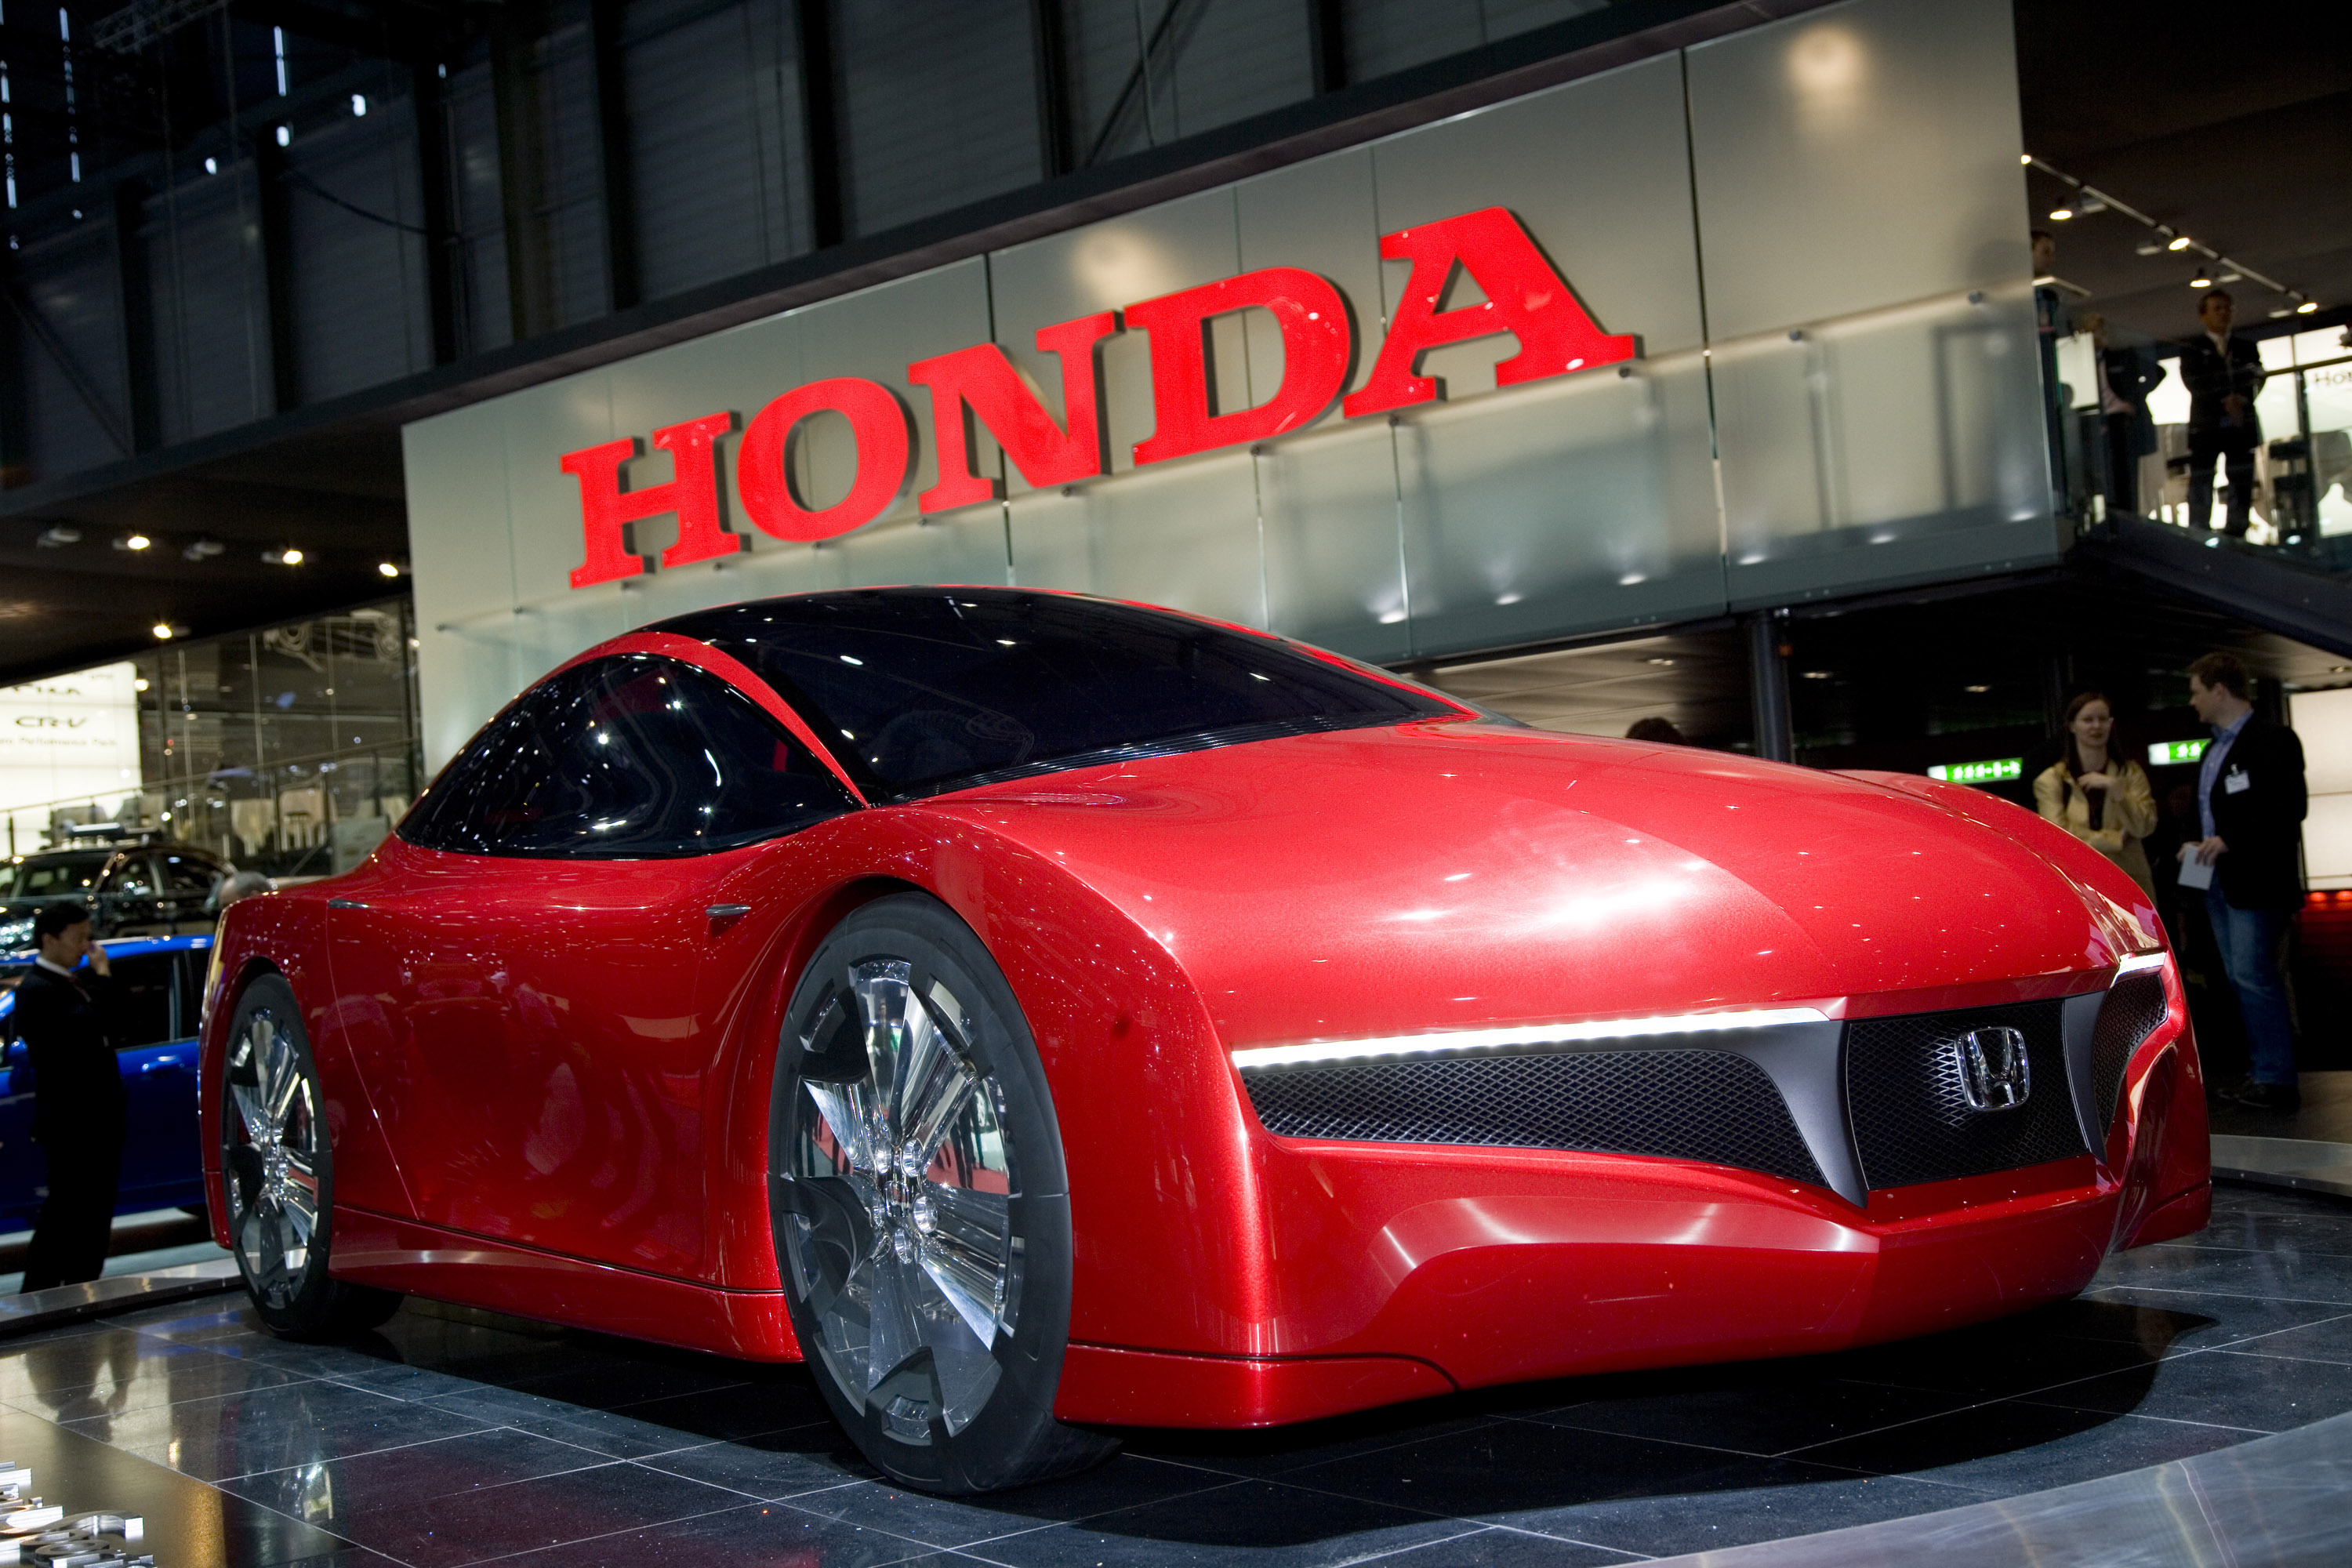 2007 Honda Small Hybrid Sports Concept - HD Pictures @ carsinvasion.com